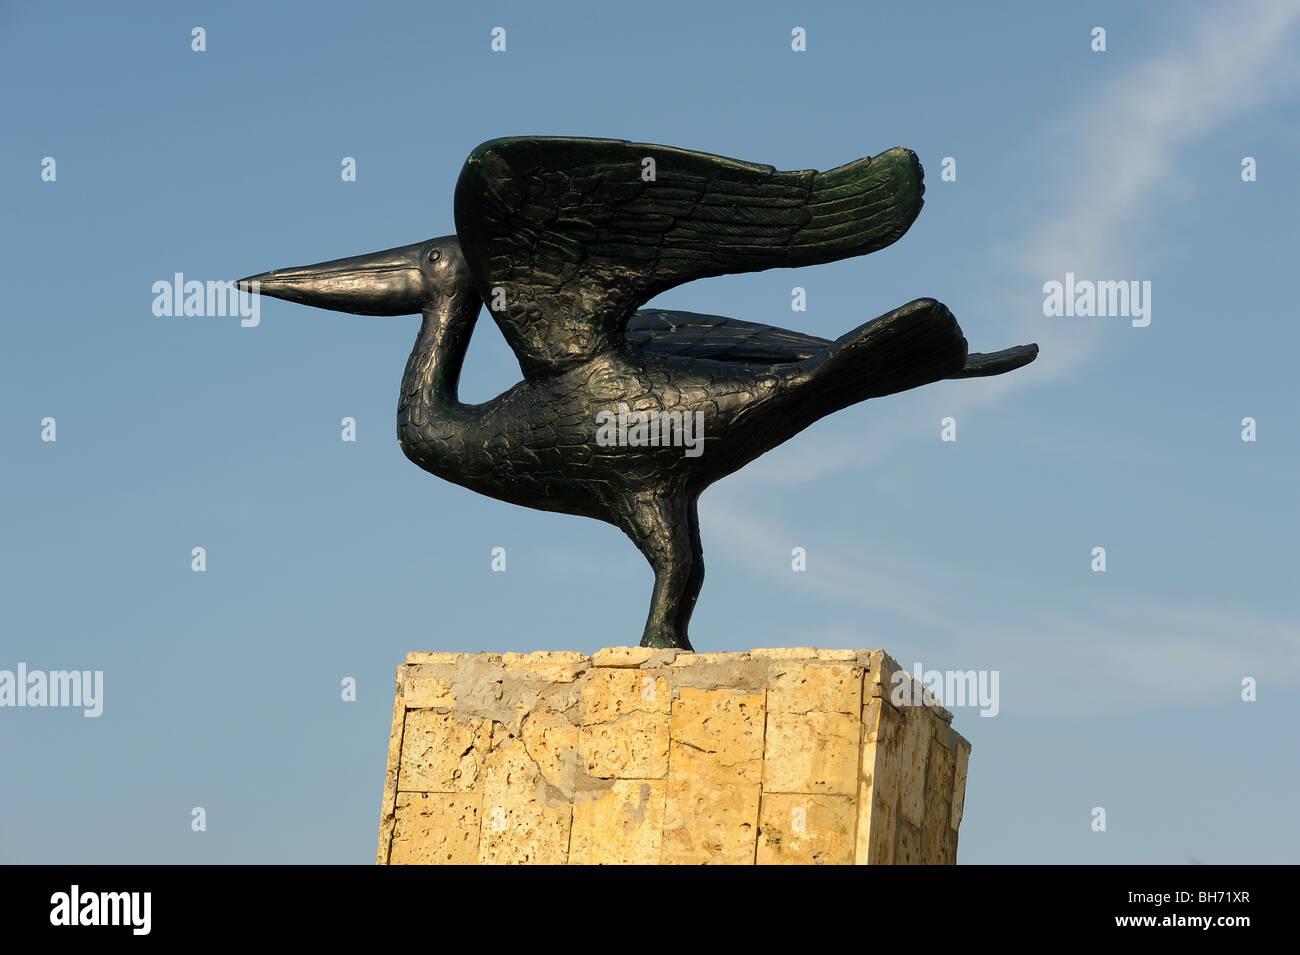 Pelican statue on plinth along Cartagena coast. Colombia South America. Stock Photo